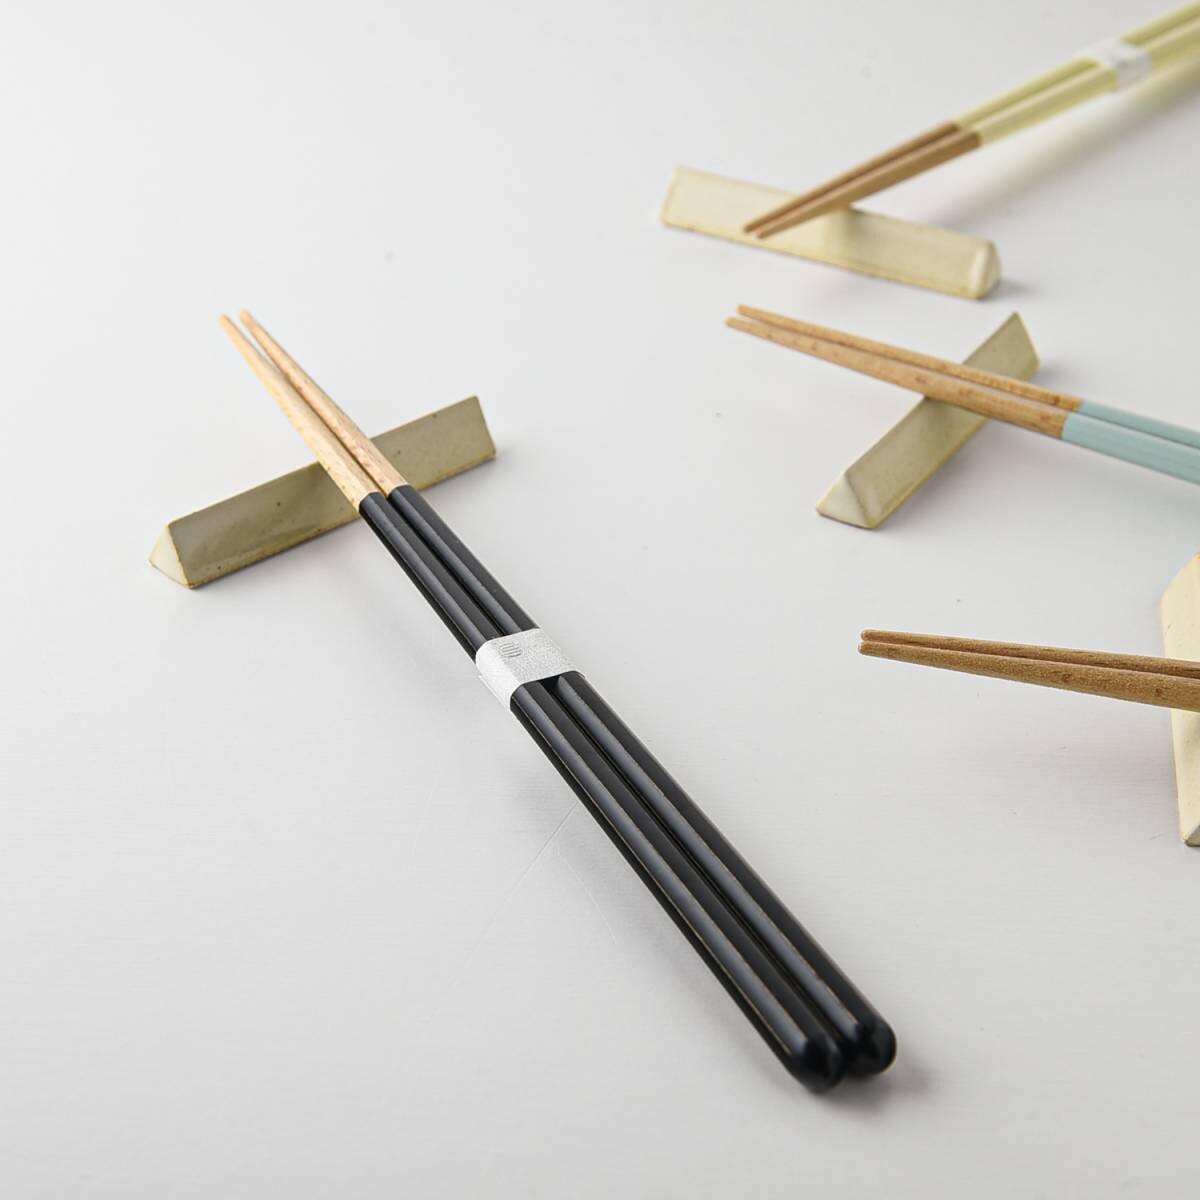 Haze日本筷子 - 黑色 Haze Japan Chopsticks - Black